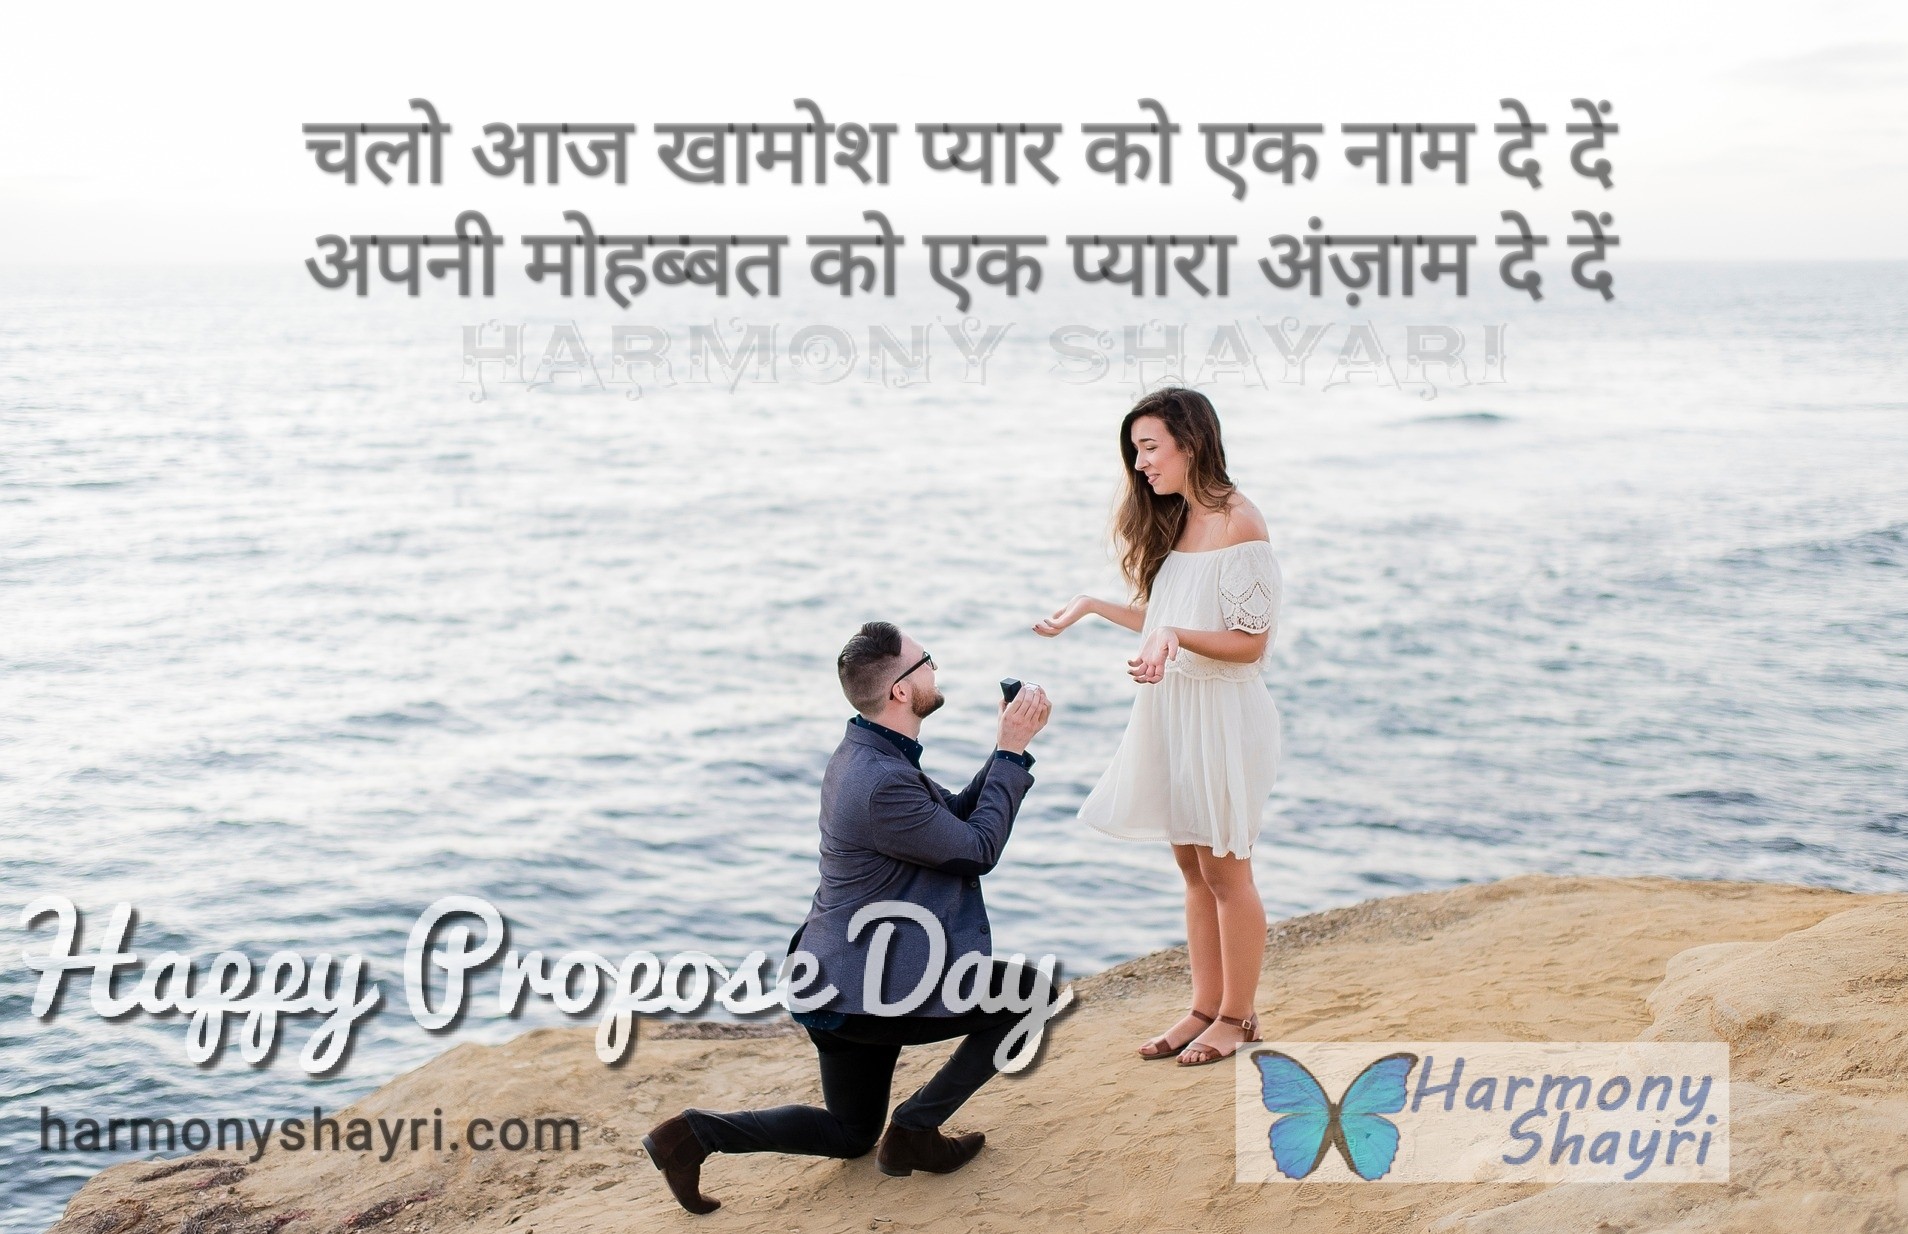 Chalo aaj khamosh pyar ko – Happy Propose Day